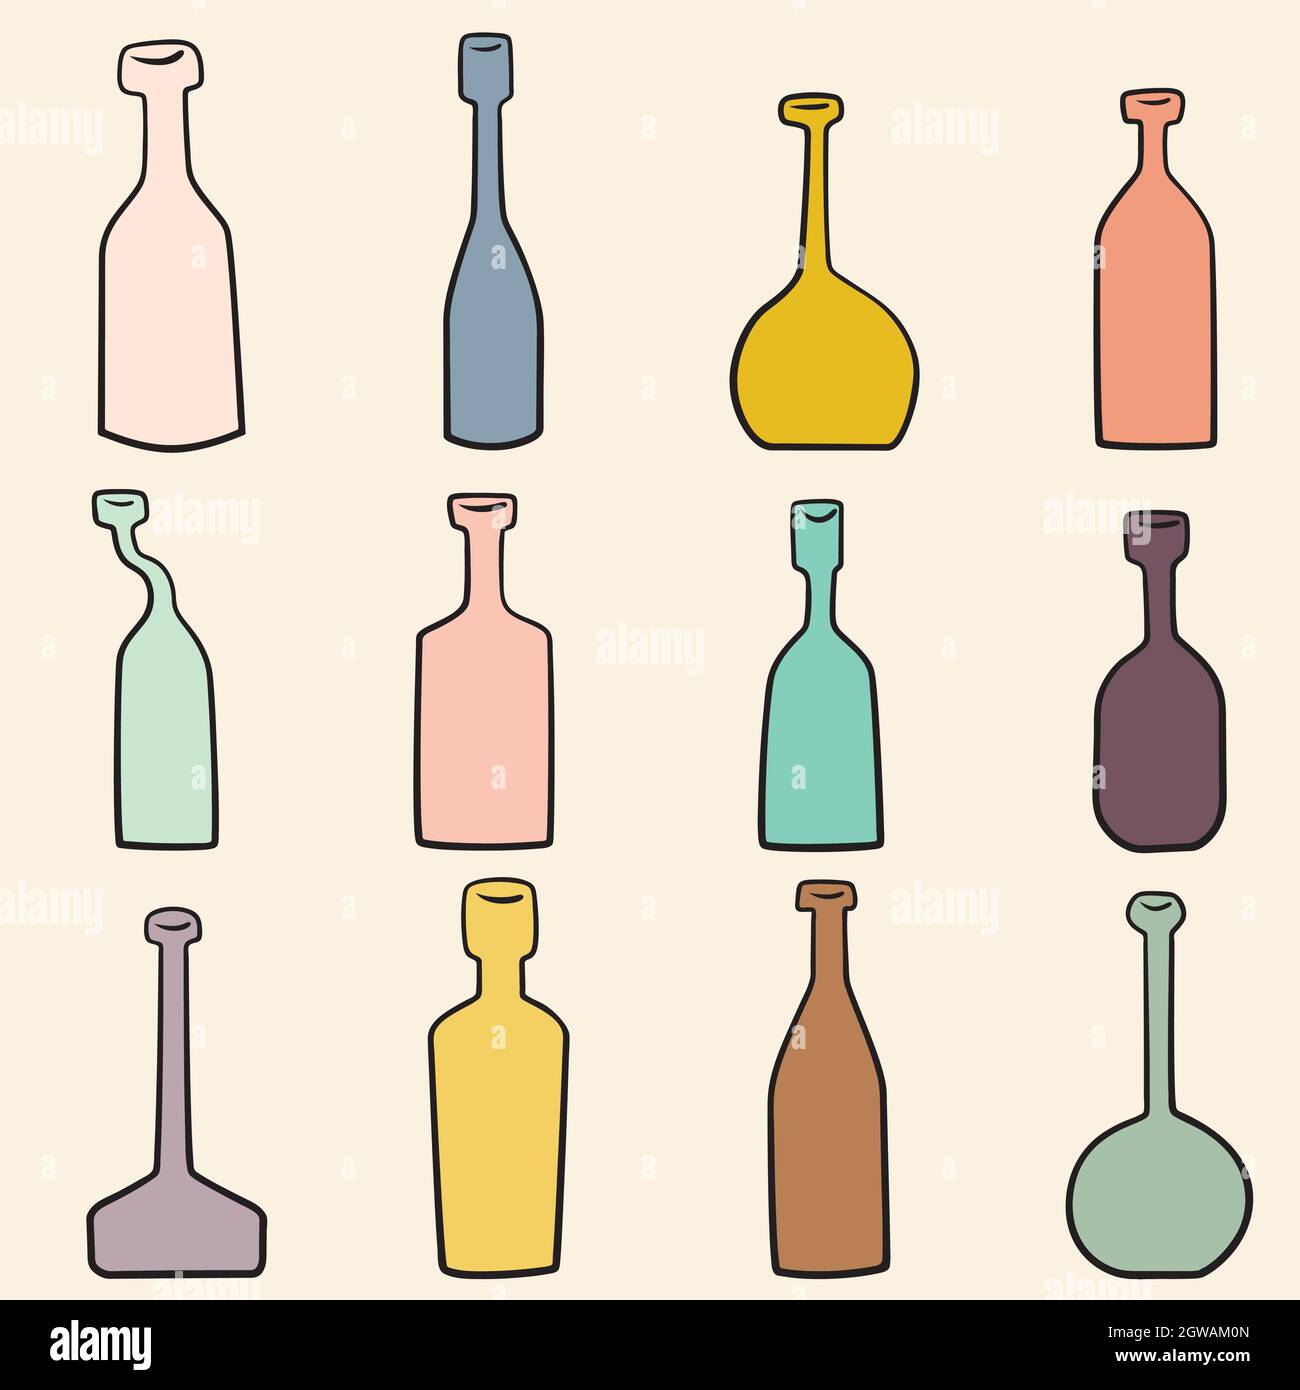 Hand Drawn Bottles. Potion vials, old medicine, unique apothecary flasks, vintage wine bottles. Colored Doodles. Stock Vector